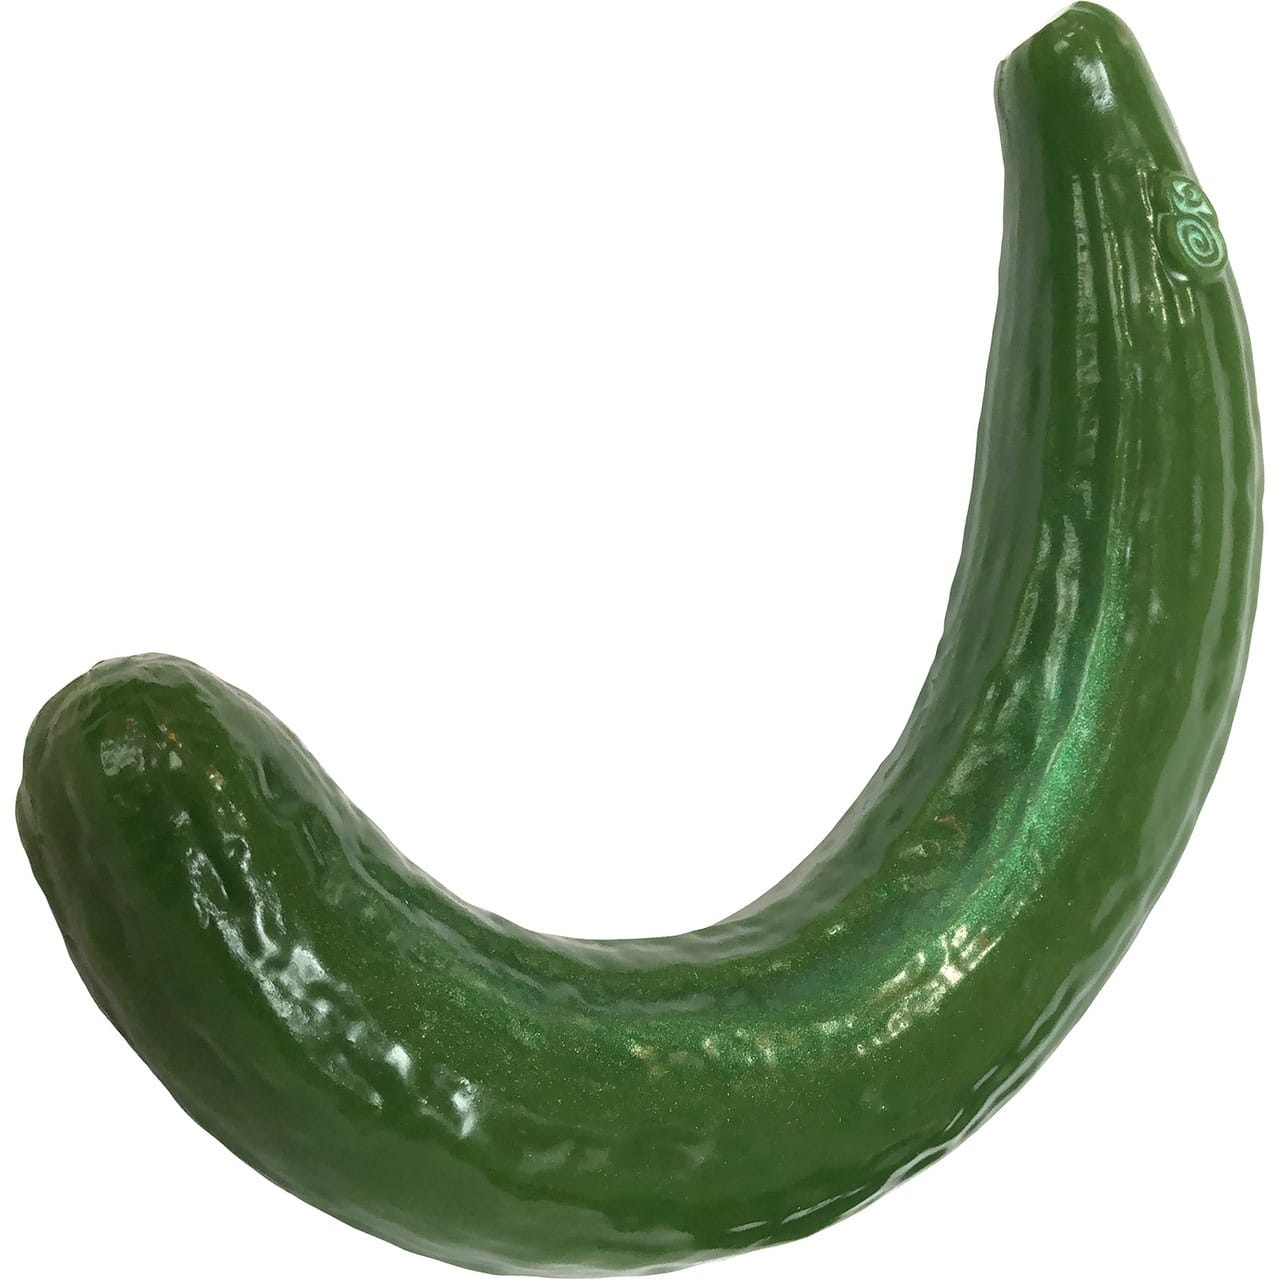 SelfDelve Curved Cucumber Dildo. Slide 4